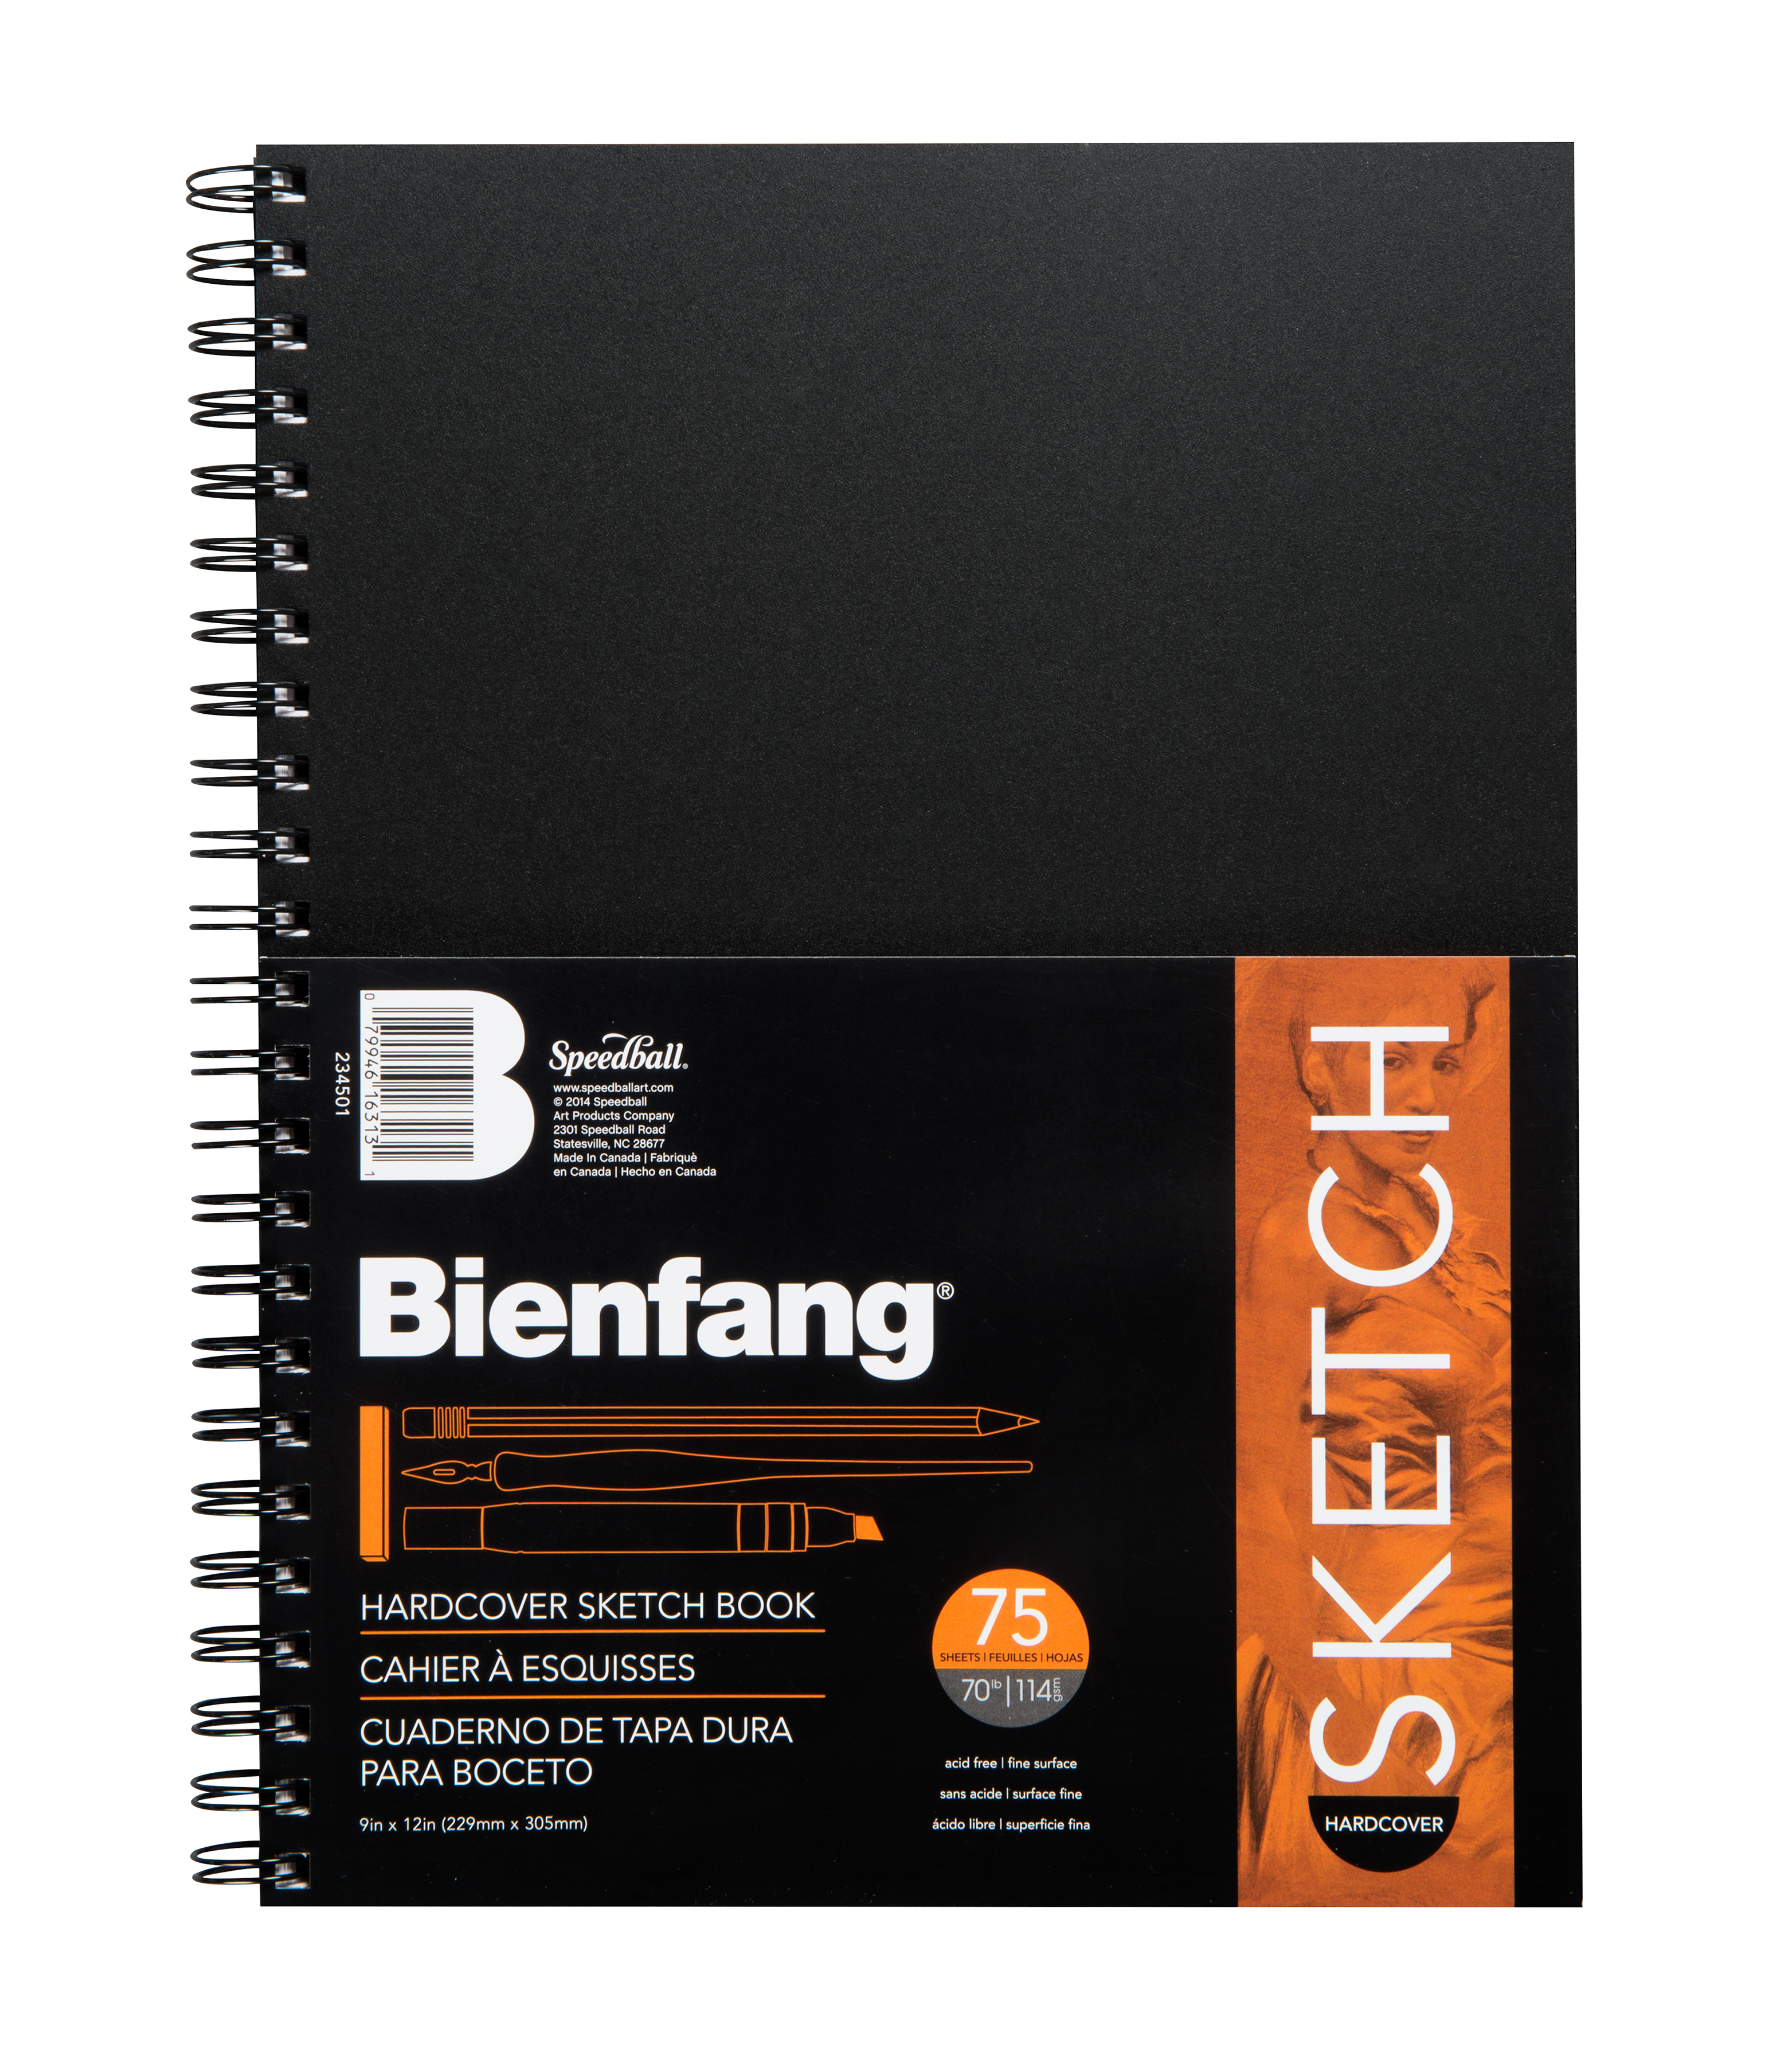 Bienfang 501 Giant Drawing Paper Pad